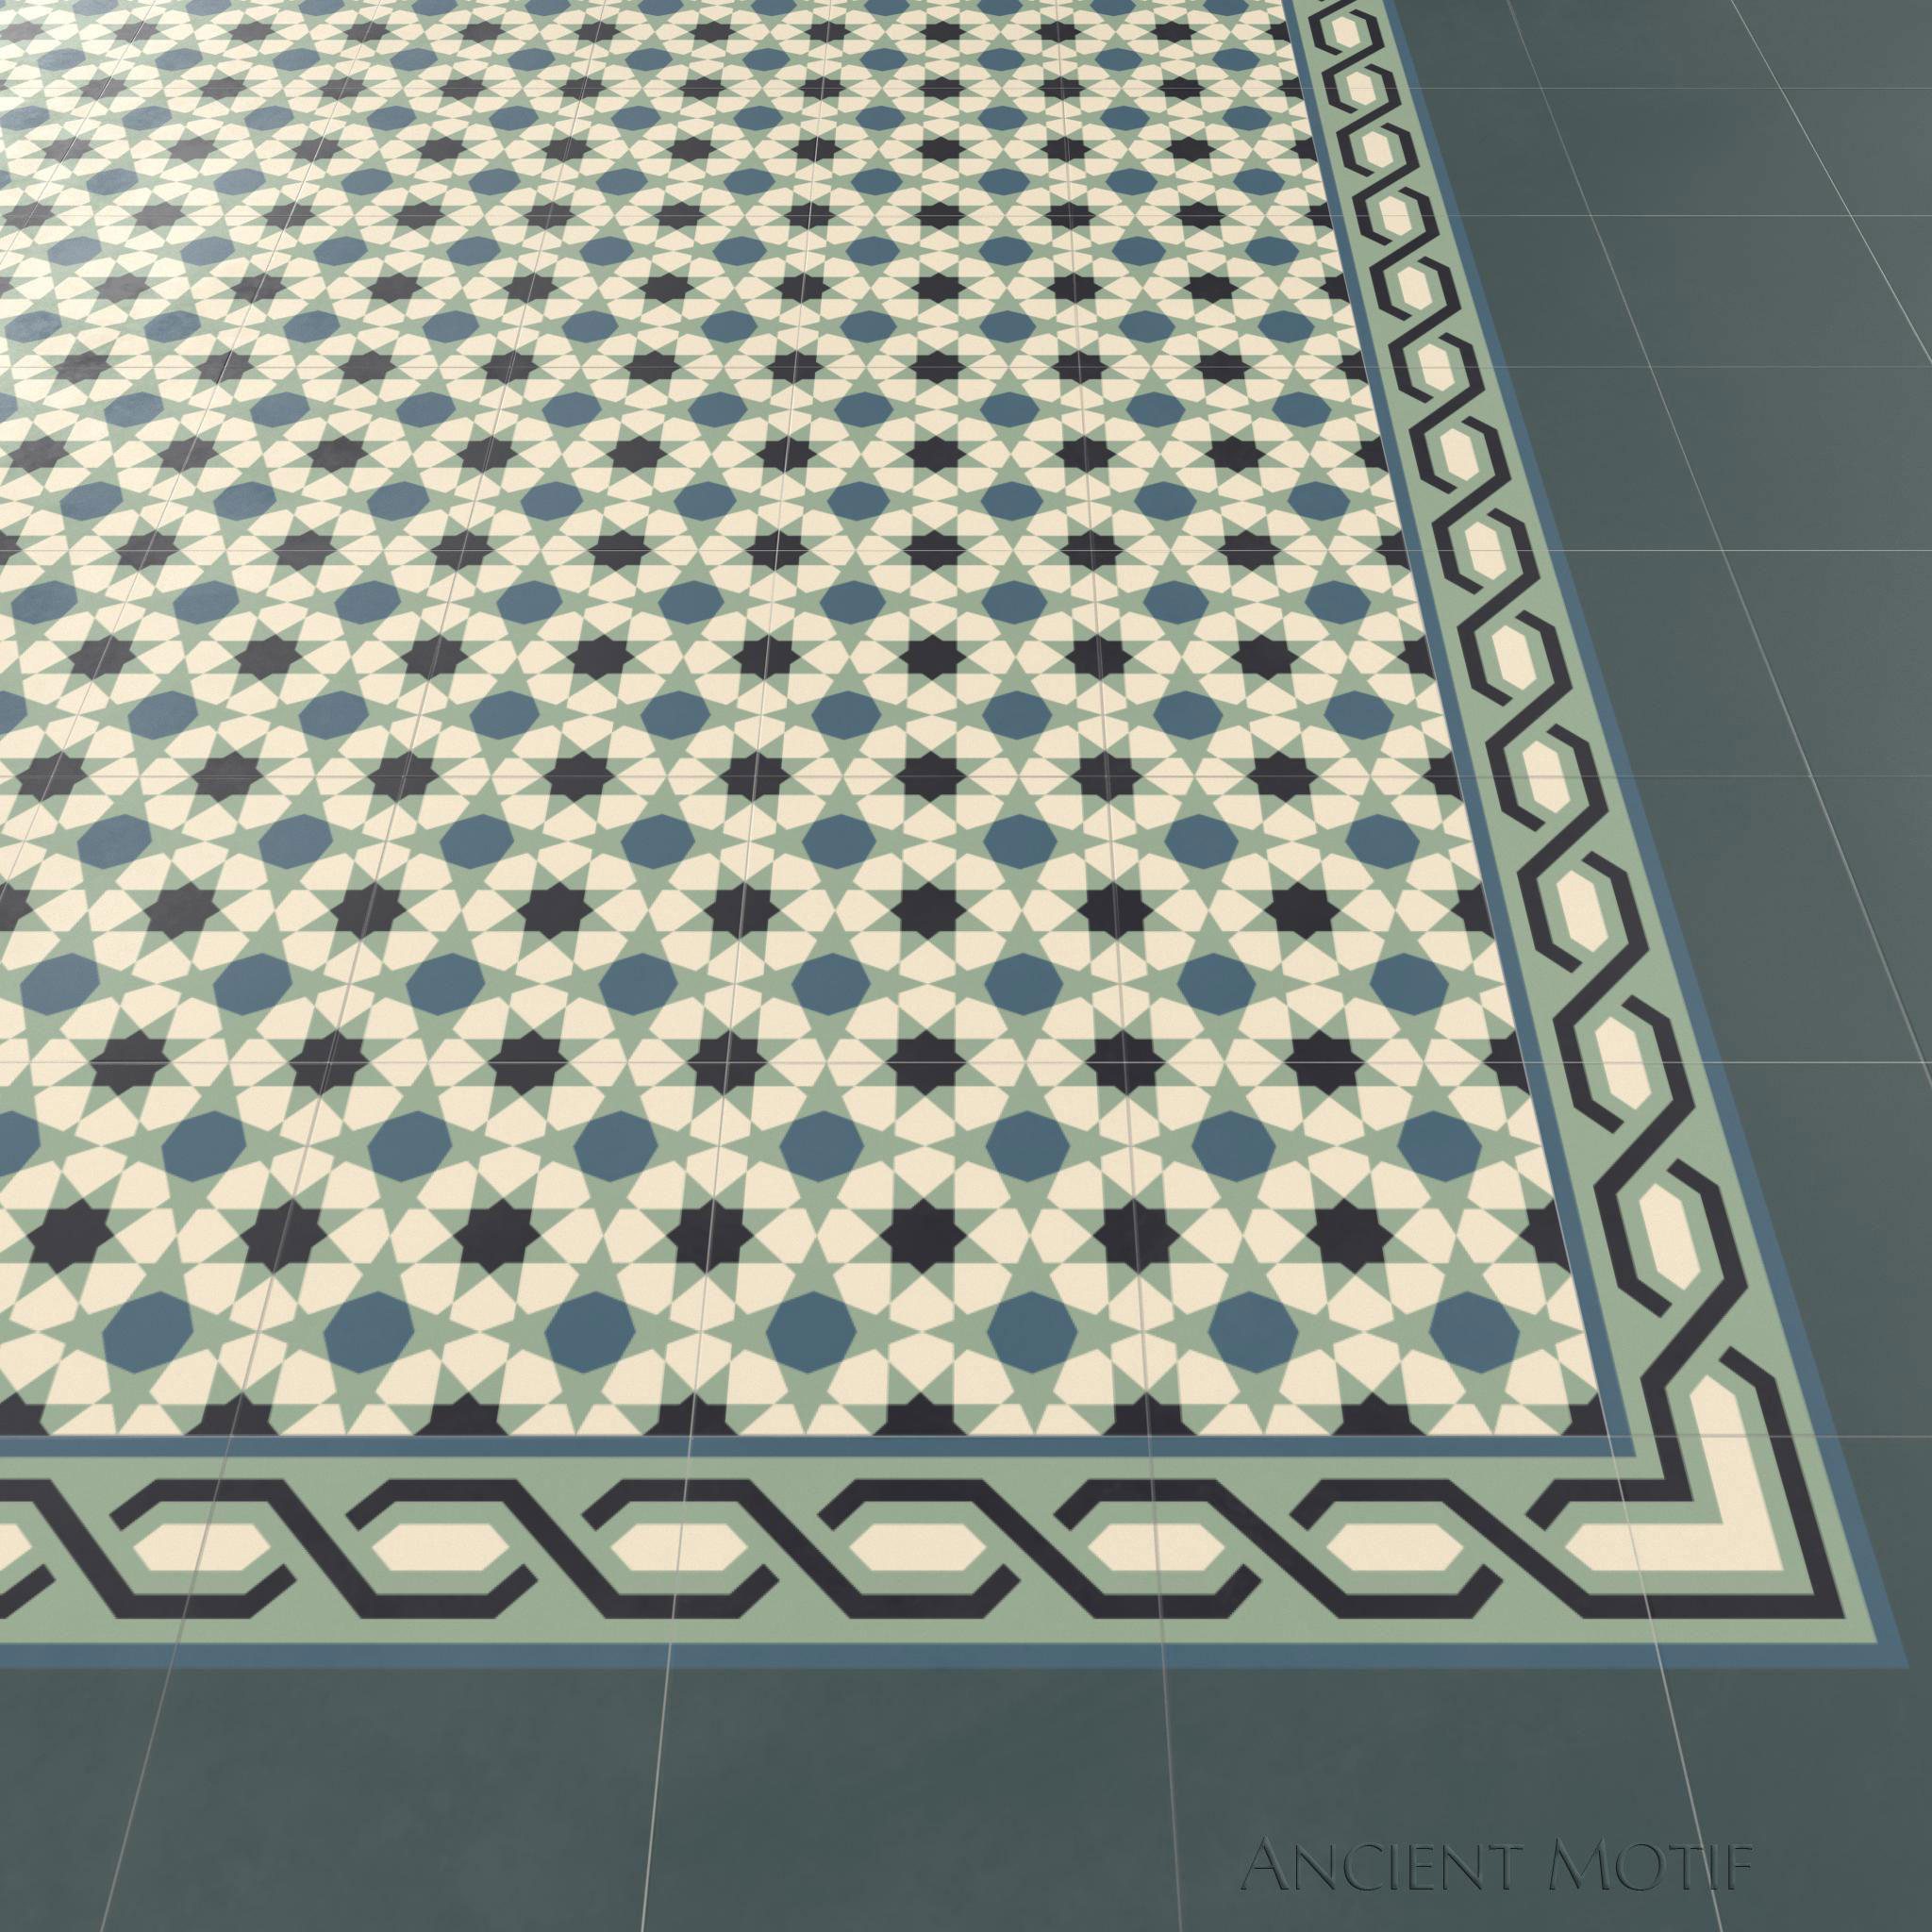 Alcazar Zellige Tile Floor in Onyx, Sage and Spruce